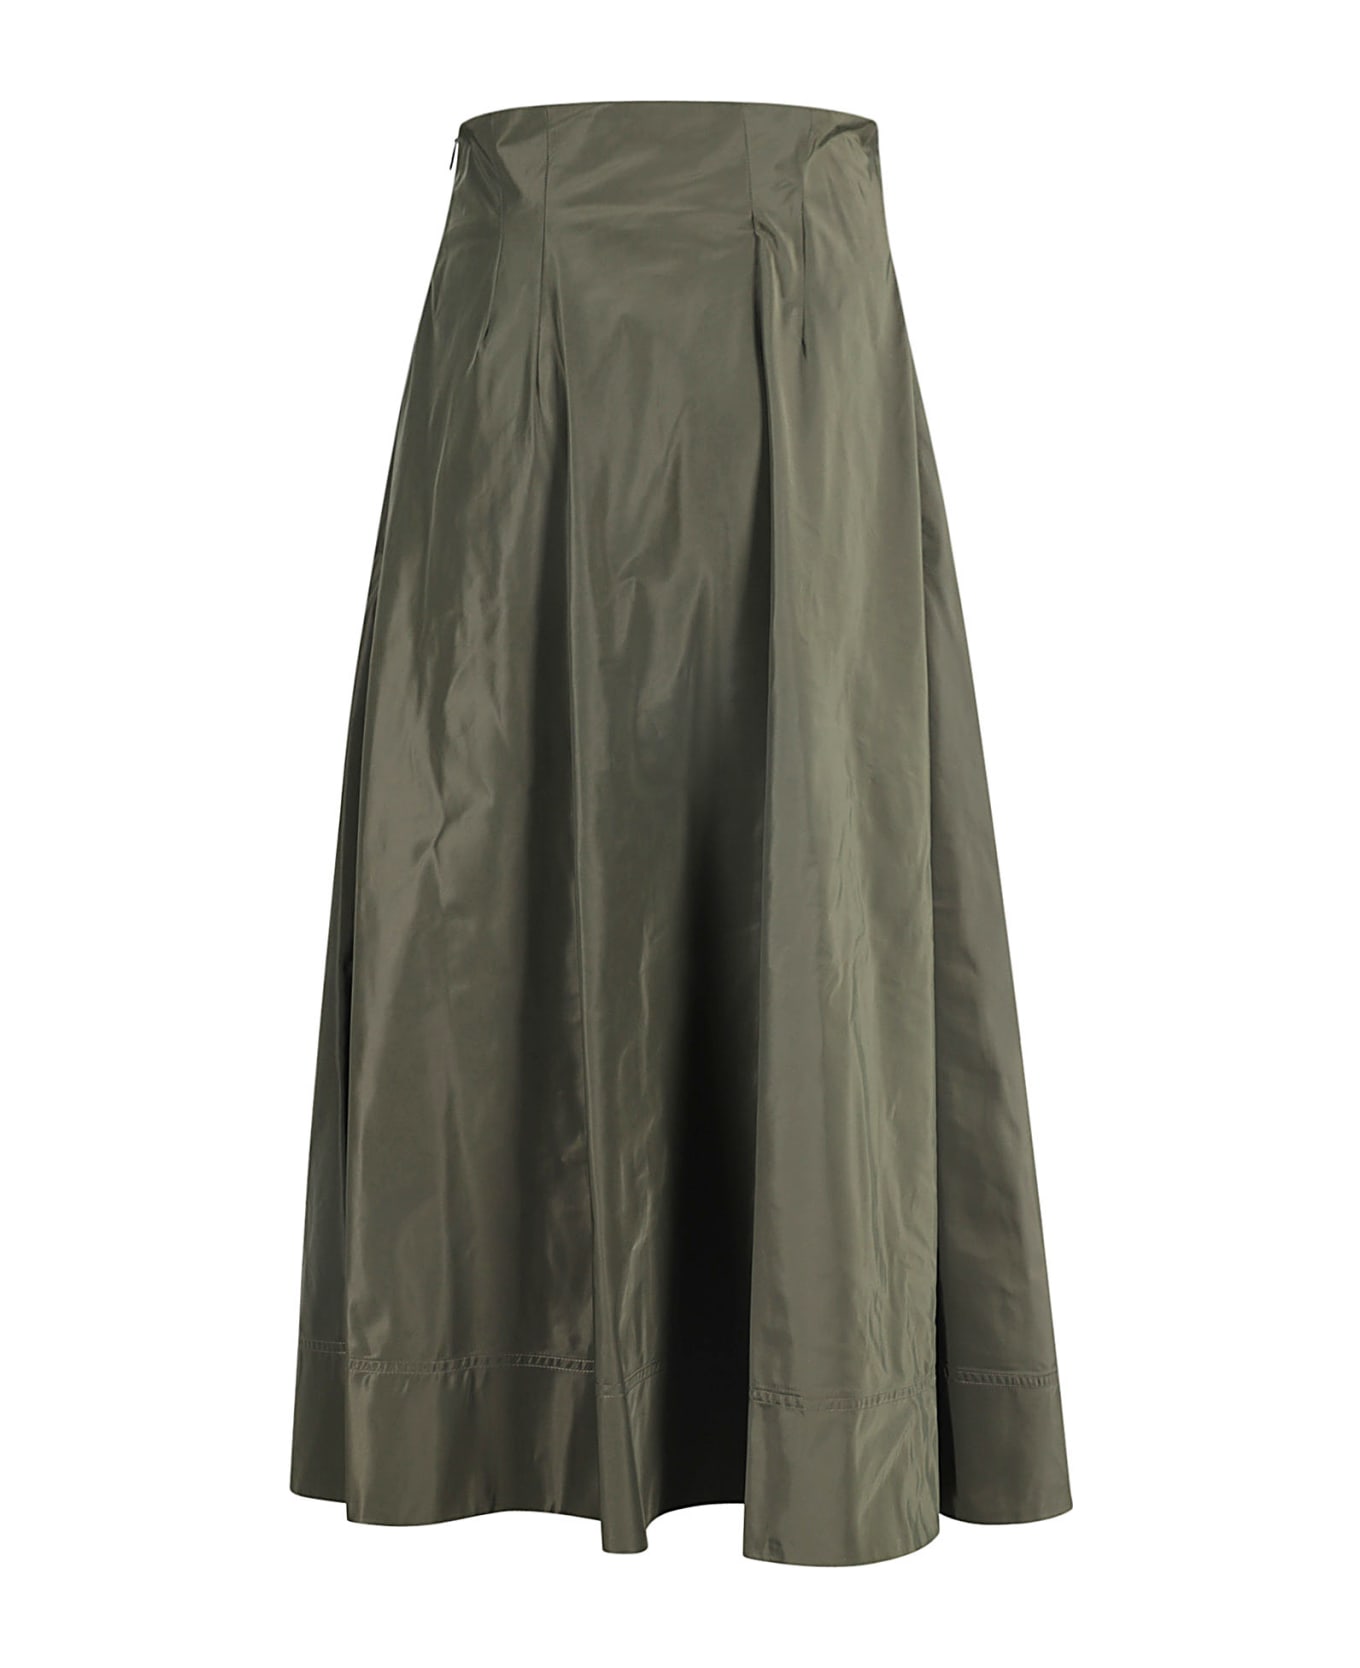 Aspesi Long Green Gathered Skirt - Militare